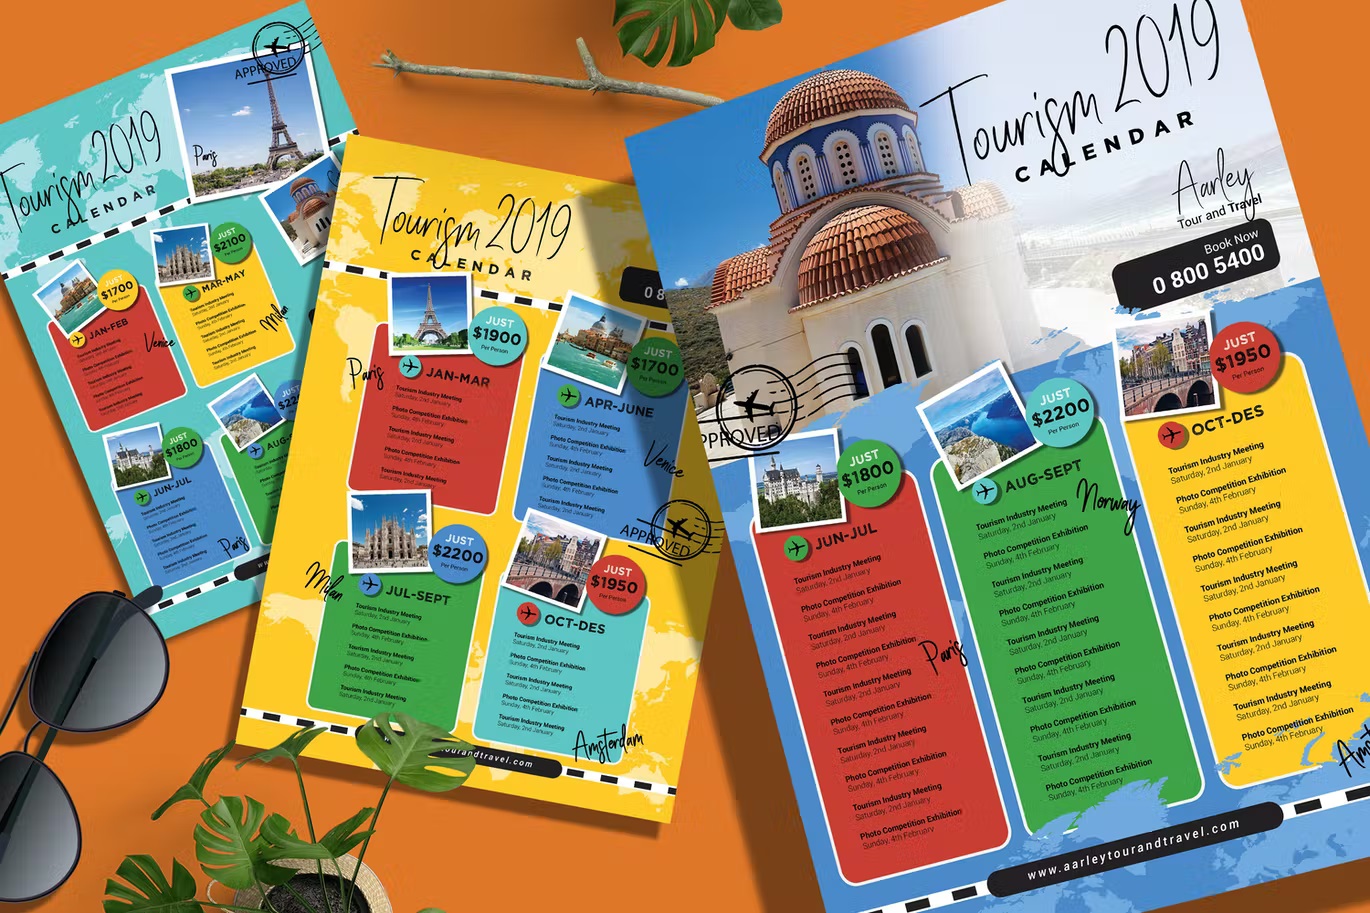 aarley-tour&travel-tourism-calender-brochure-webvizion